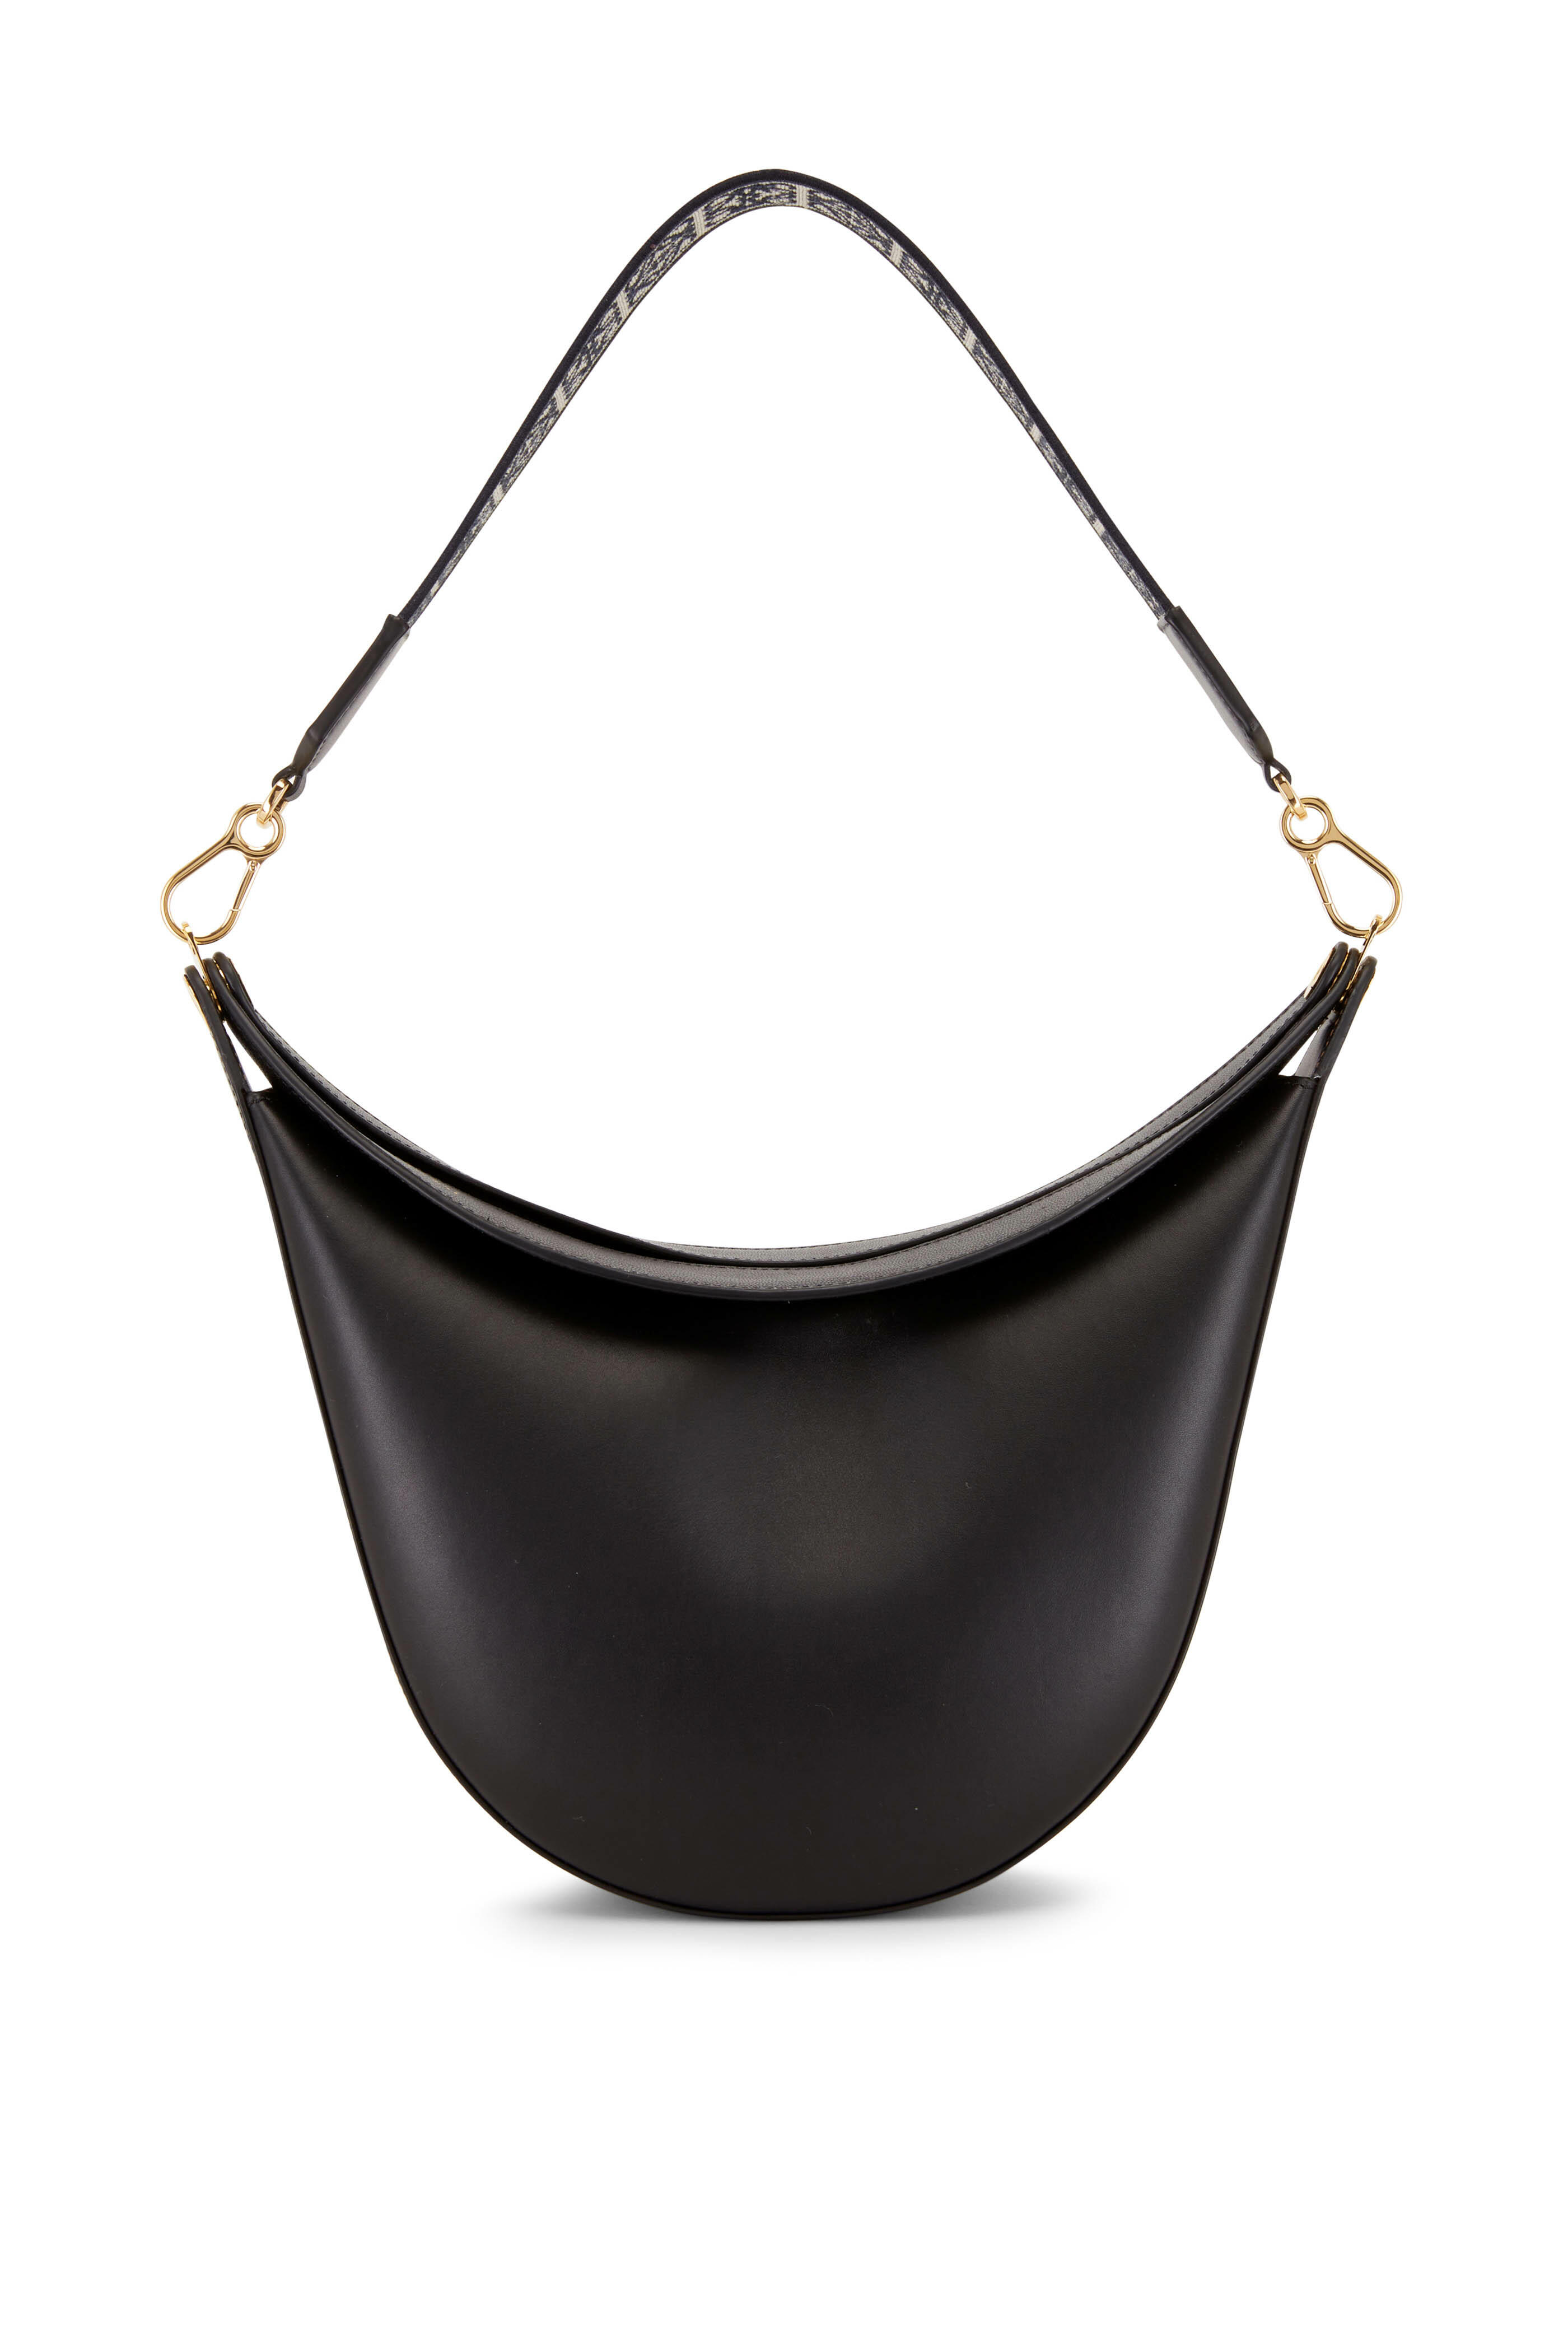 Loewe - Luna Black Leather Bag | Mitchell Stores